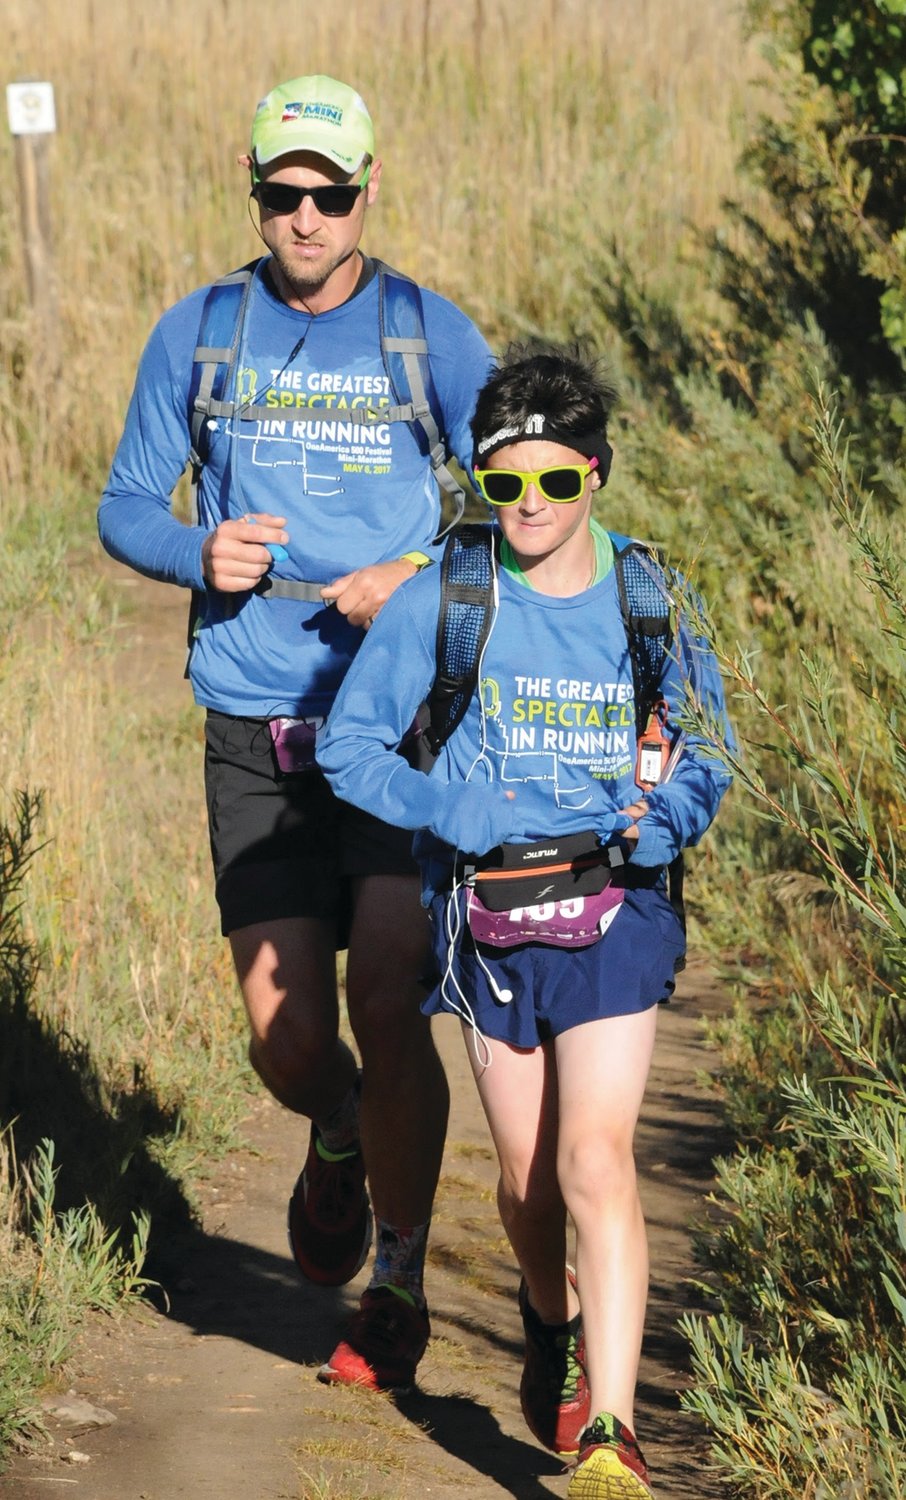 David McCartney and his son, Elijah, run in an ultramarathon. They’ve set a goal of running an ultramarathon in every state to raise awareness of kidney disease and living organ donations. David McCartney became a living kidney donor in 2019.